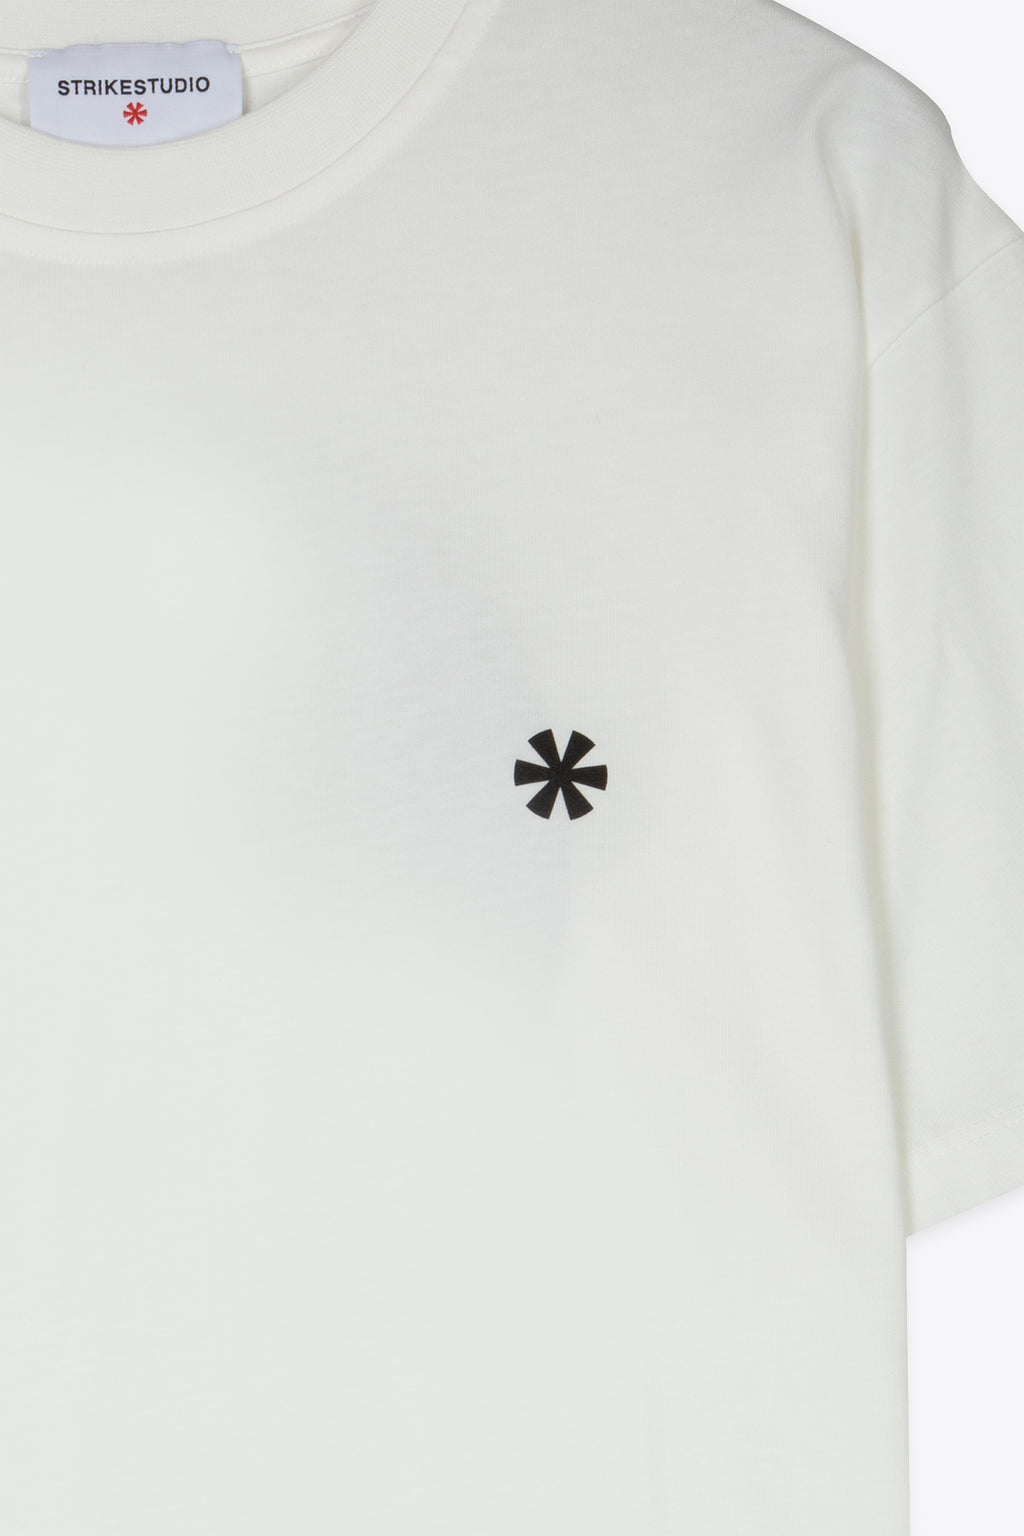 alt-image__White-t-shirt-with-Yin-and-Yang-print---Tao-tee